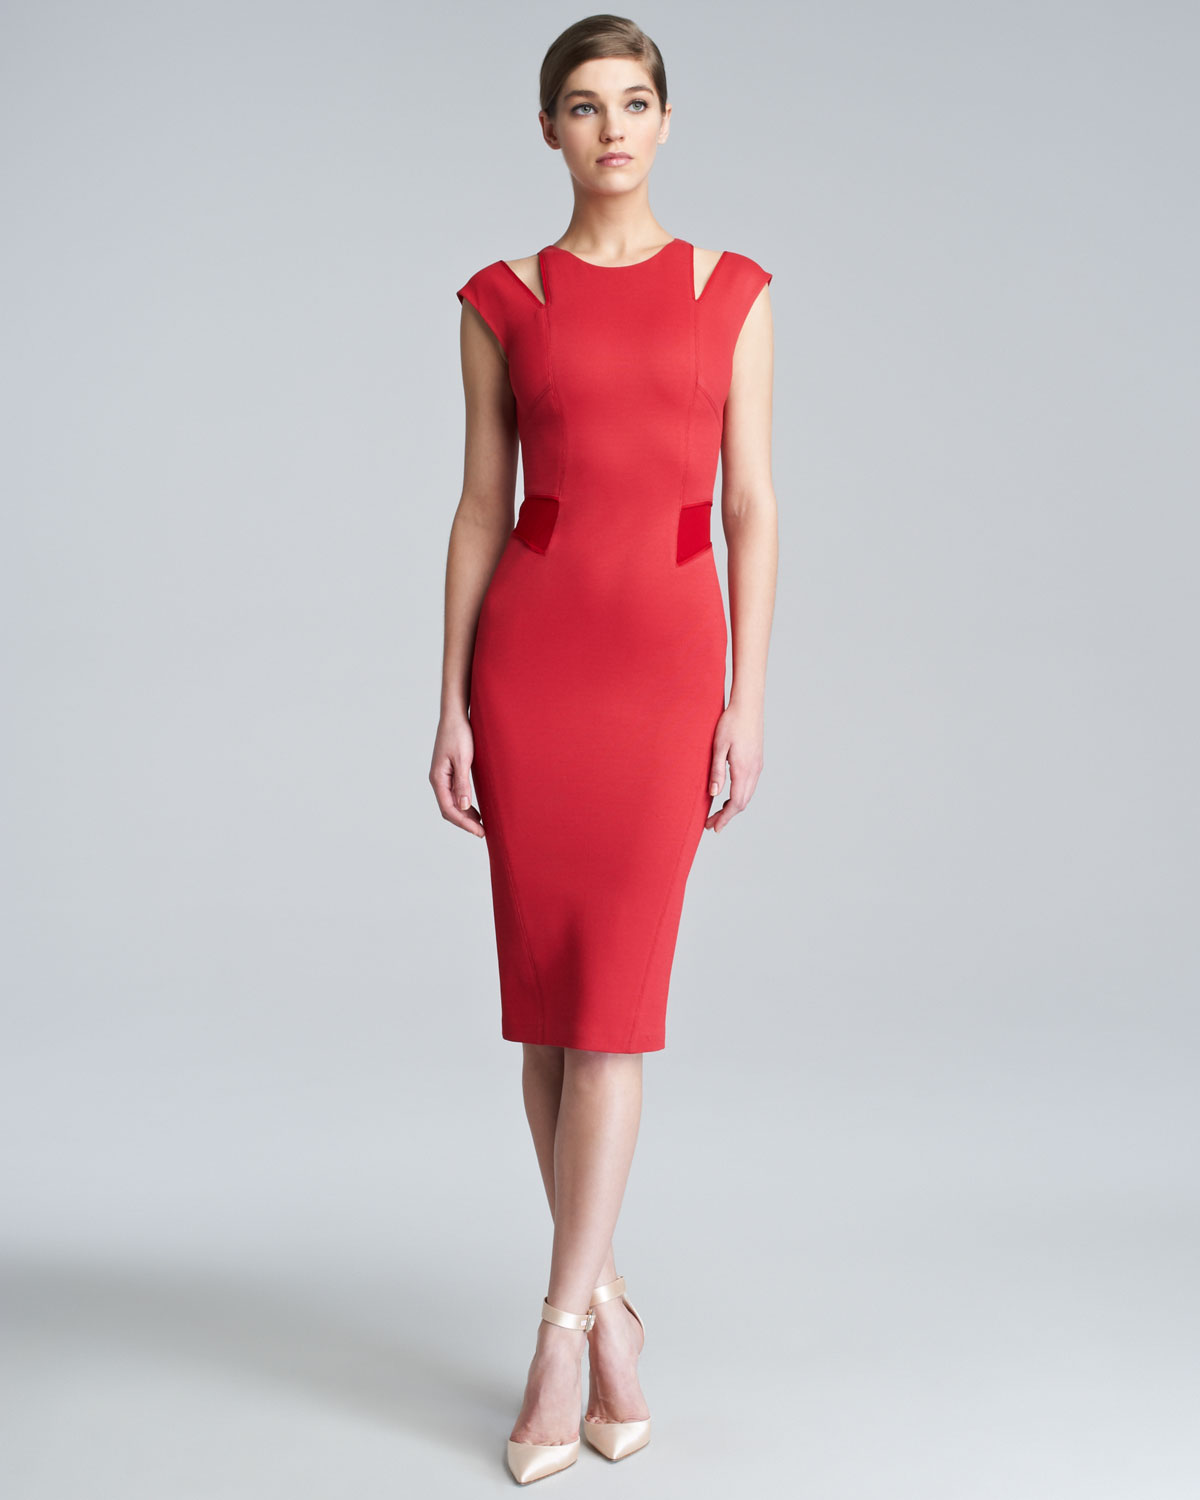 Lyst - Zac Posen Bondage Jersey Cutout Dress in Red